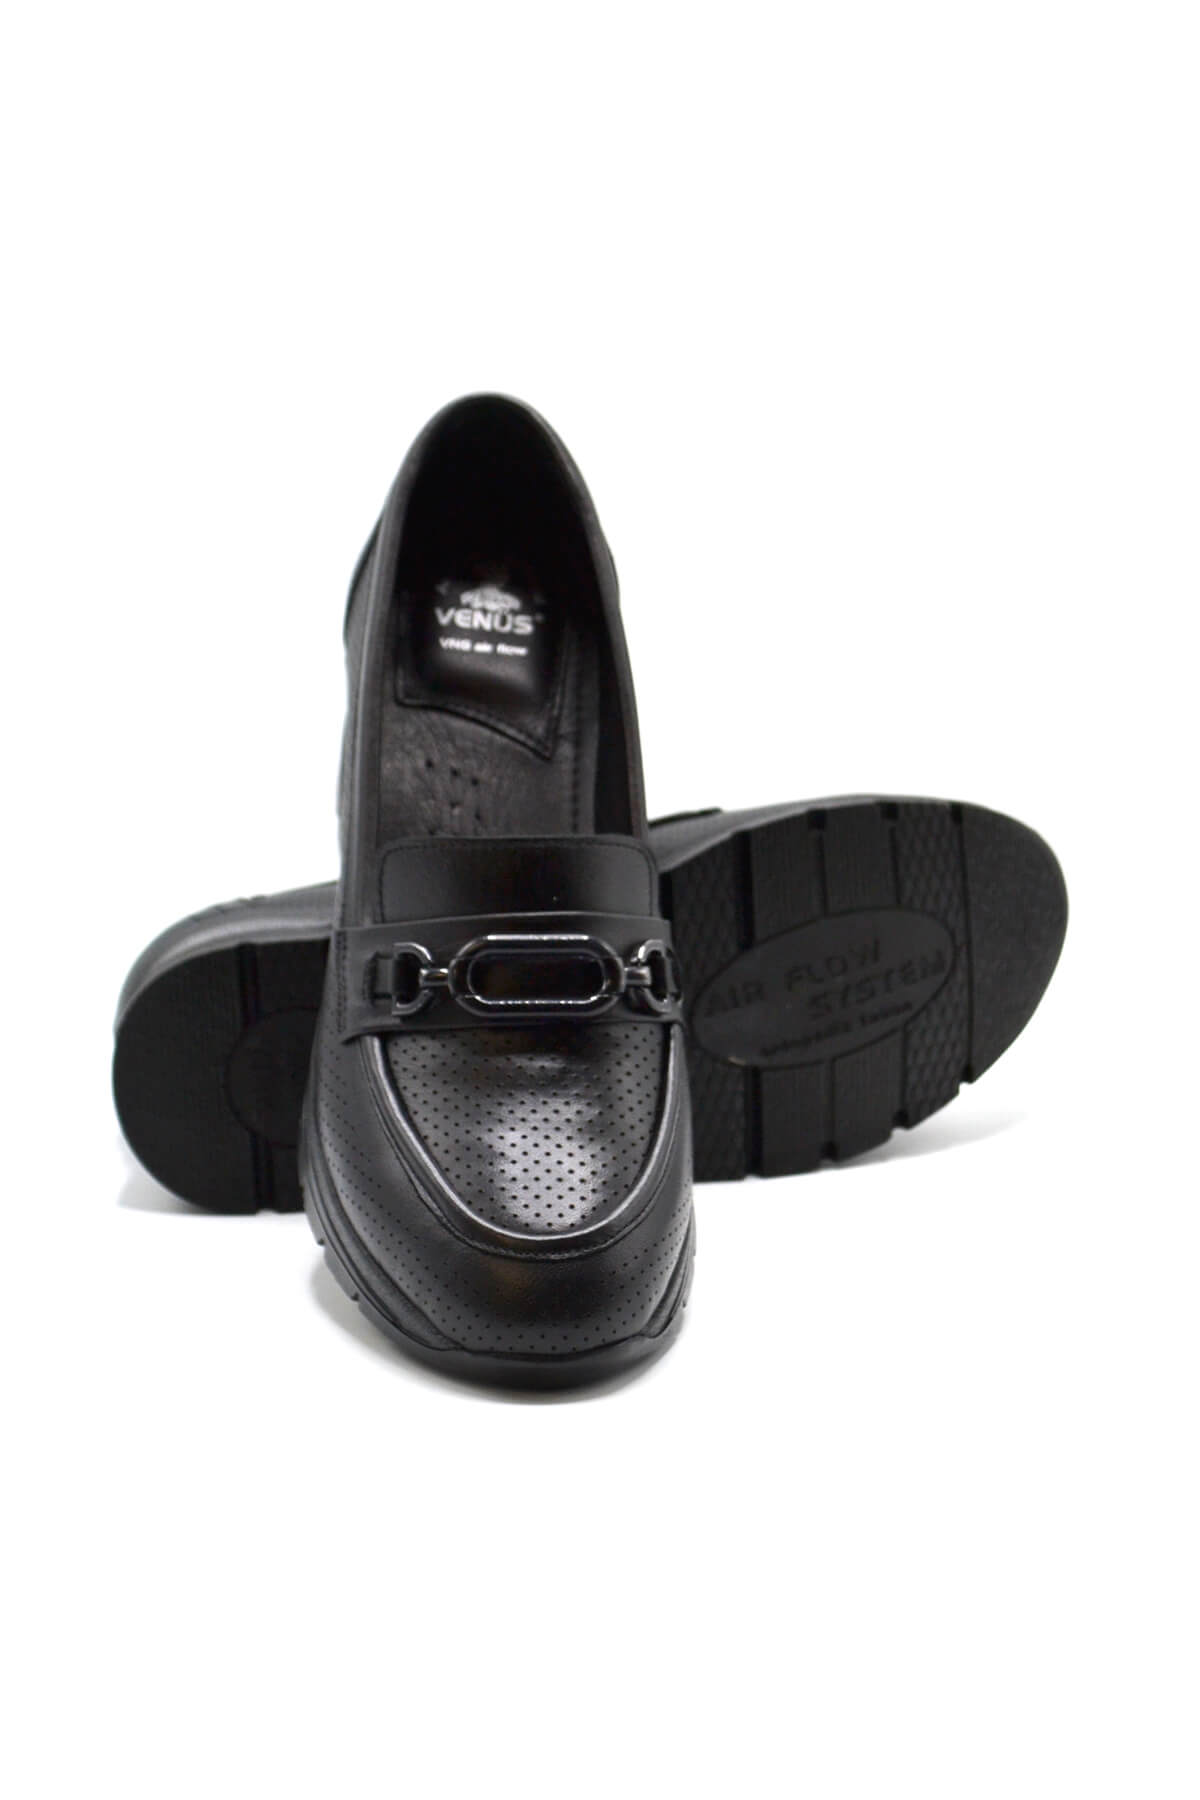 Kadın Airflow Deri Ayakkabı Siyah 2313001Y - Thumbnail